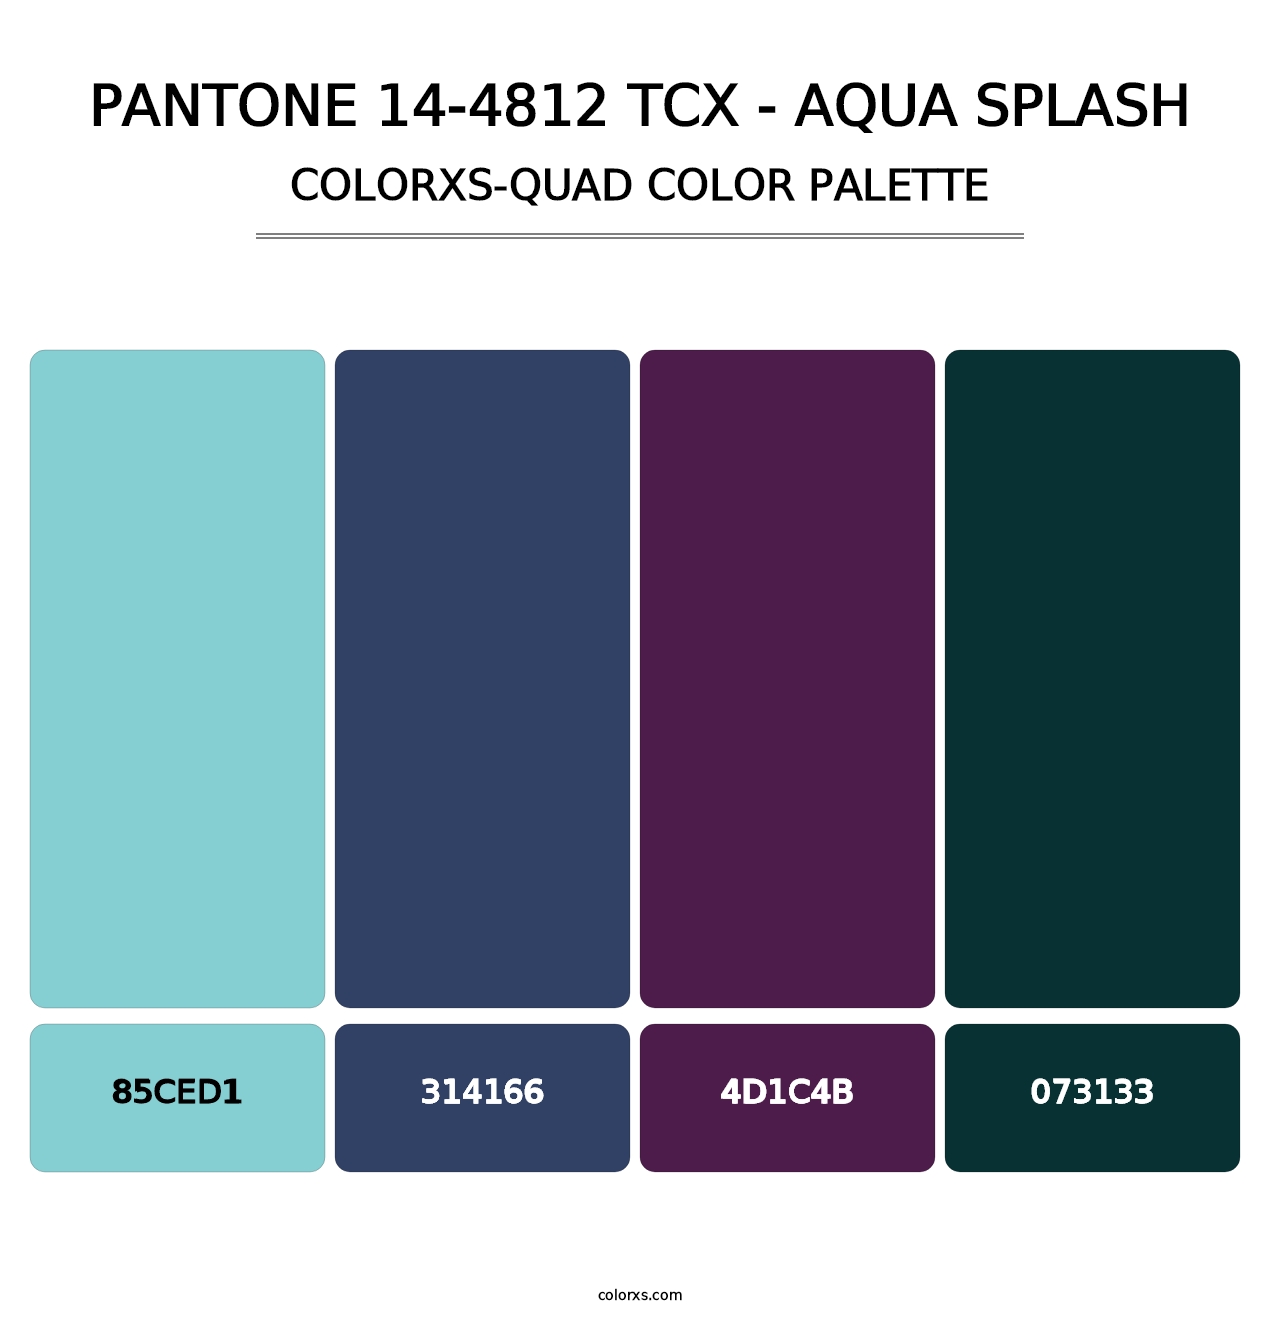 PANTONE 14-4812 TCX - Aqua Splash - Colorxs Quad Palette